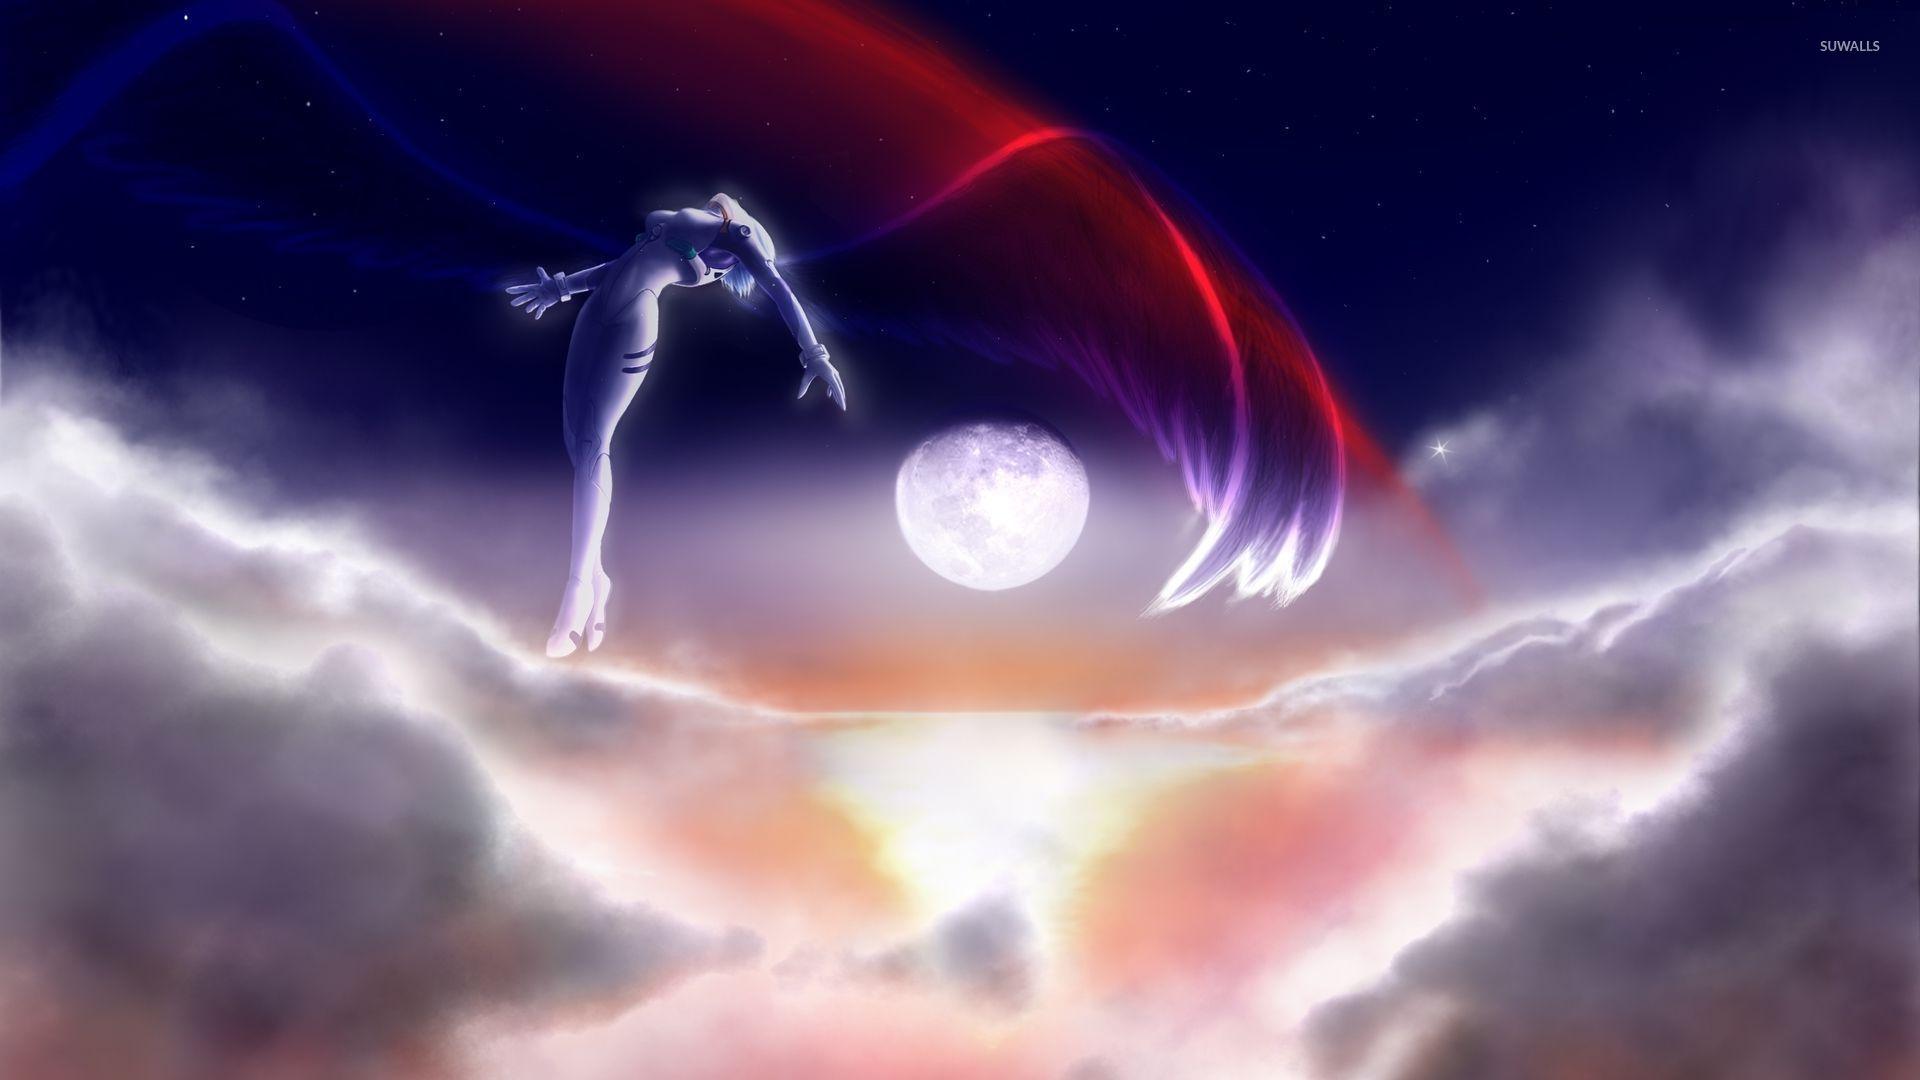 1920x1080 Neon Genesis Evangelion angel in the sky hình nền - Hình nền anime